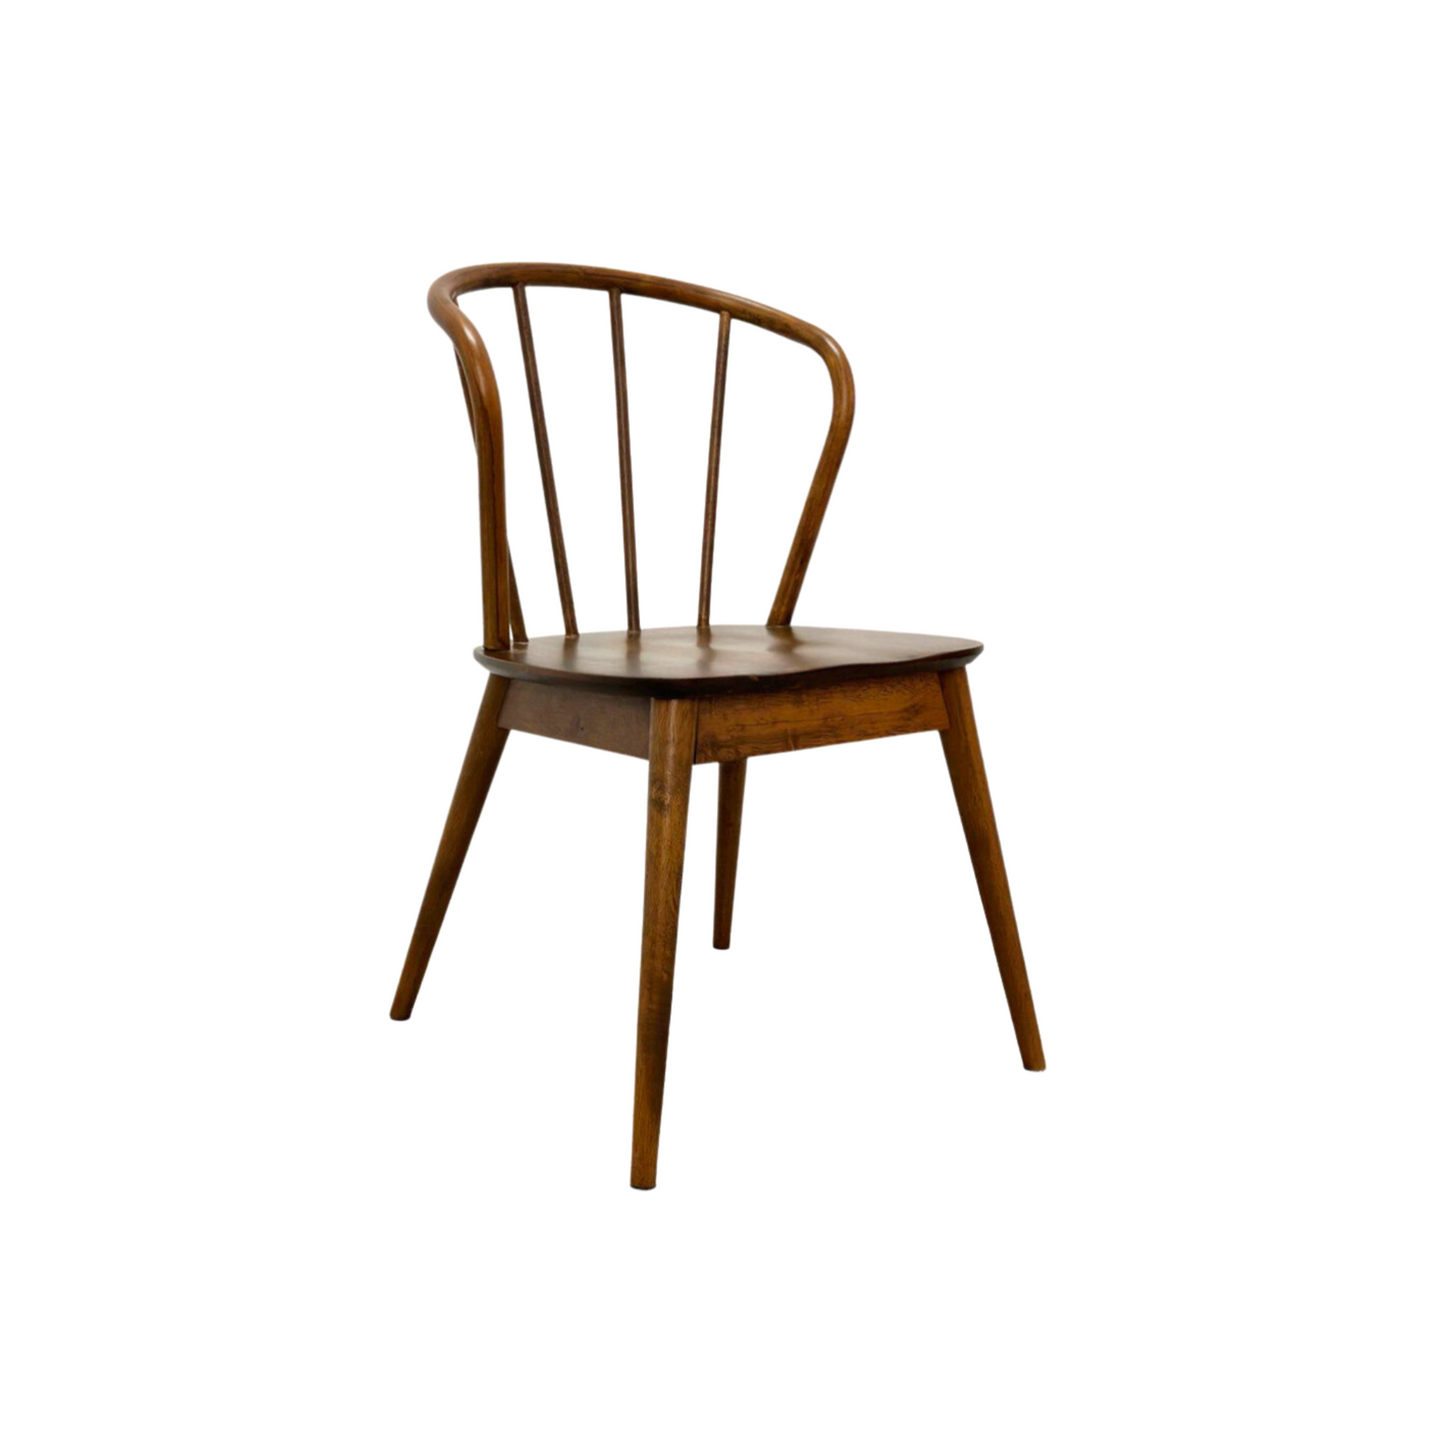 Harper Dining Chair